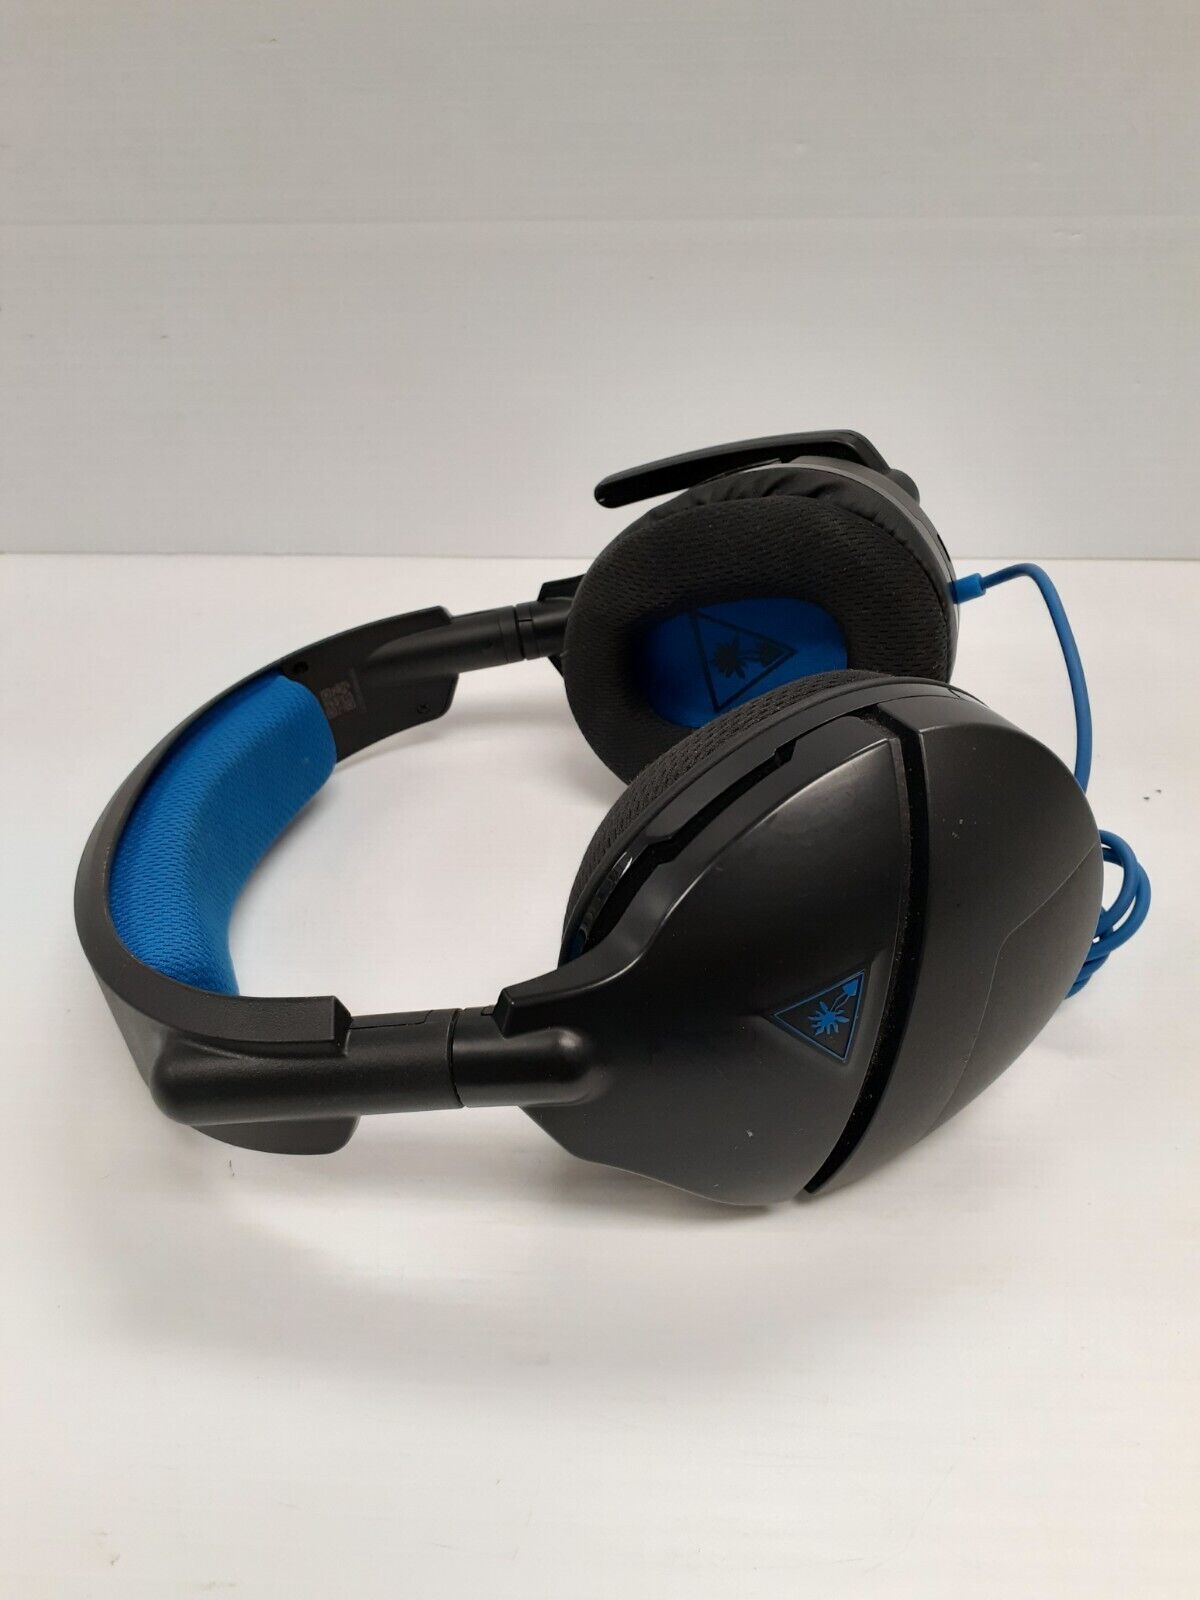 (N69494-1) Turtle Beach Ear Force Stealth 30 PS4 Headset